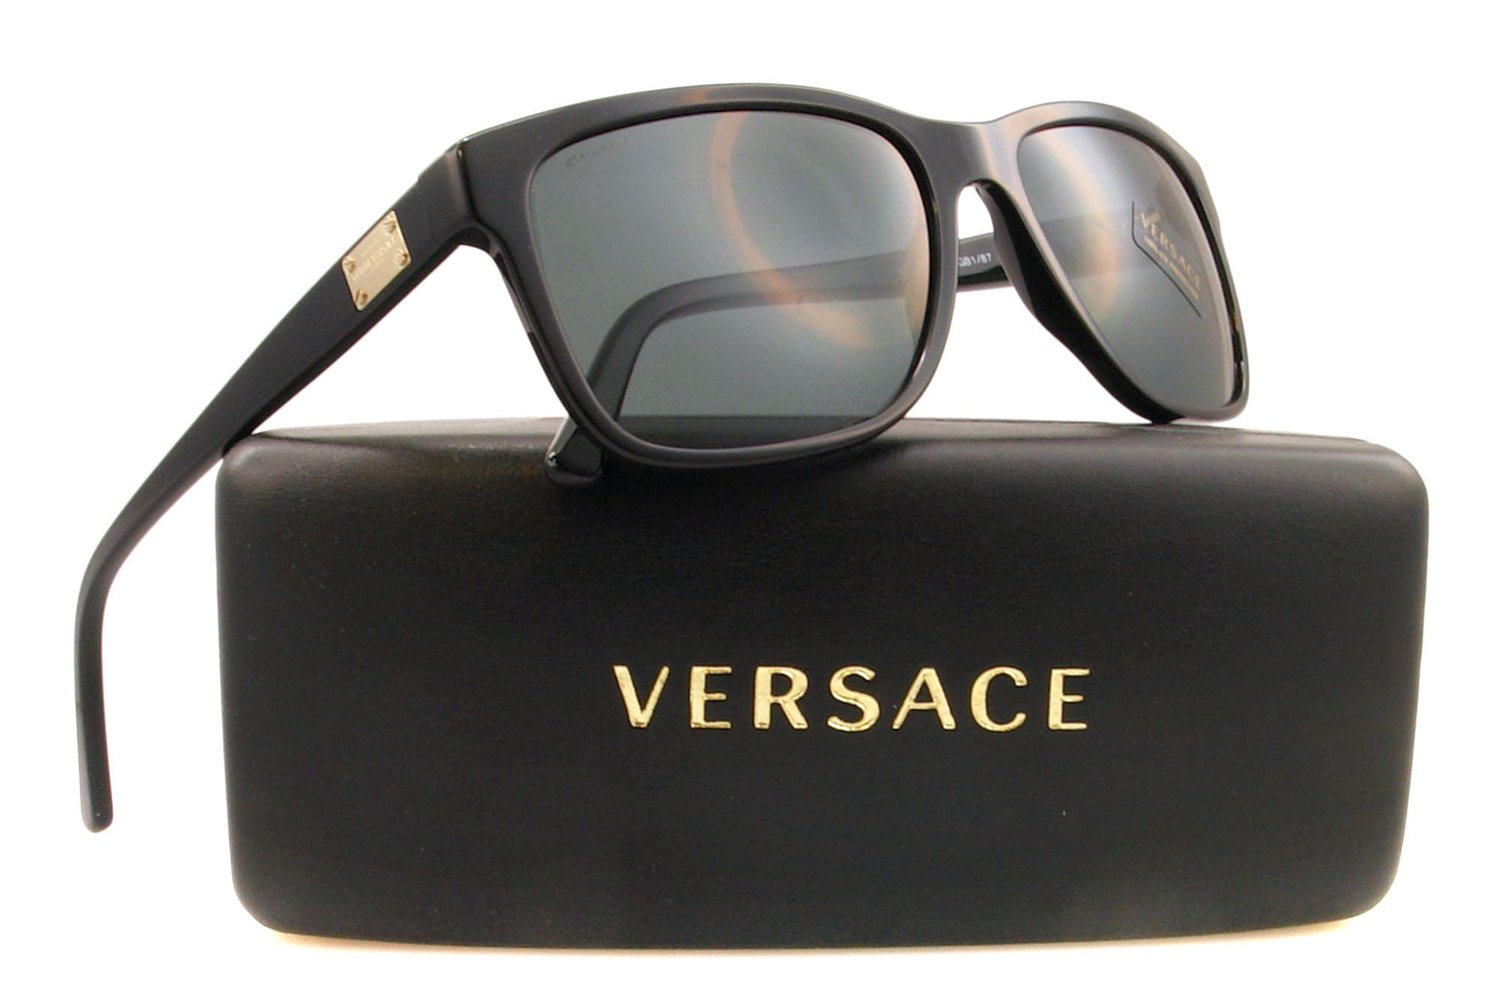 Versace Sunglasses For Men & Women | StylesWardrobe.com